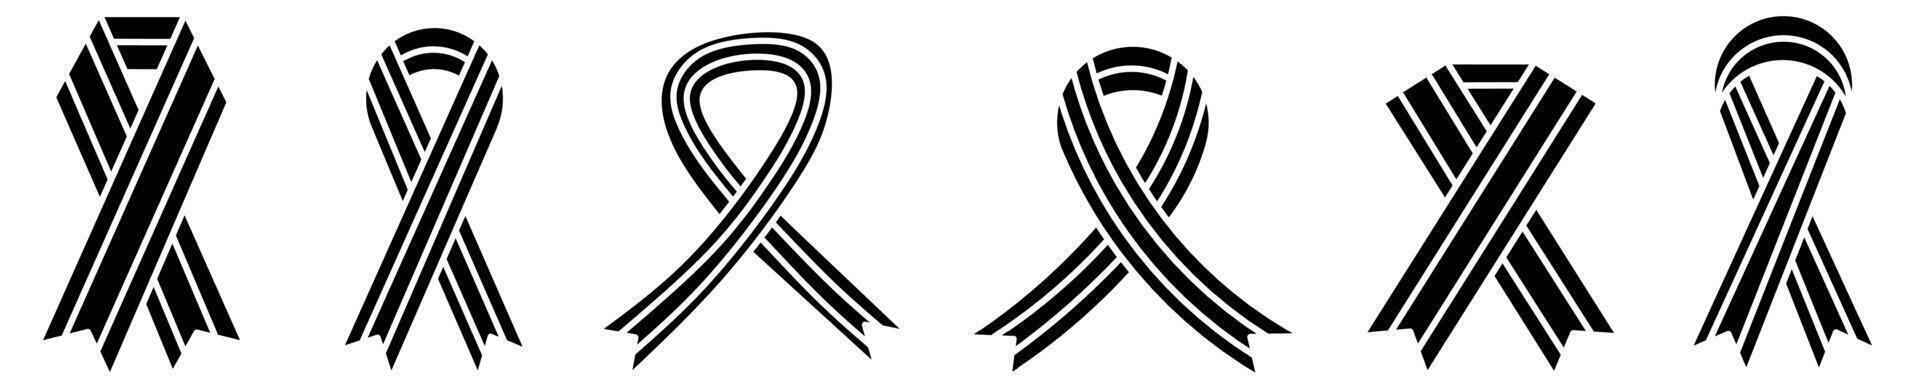 Ribbon icon illustration. Black and white ribbon icon set. Stock vector collection.